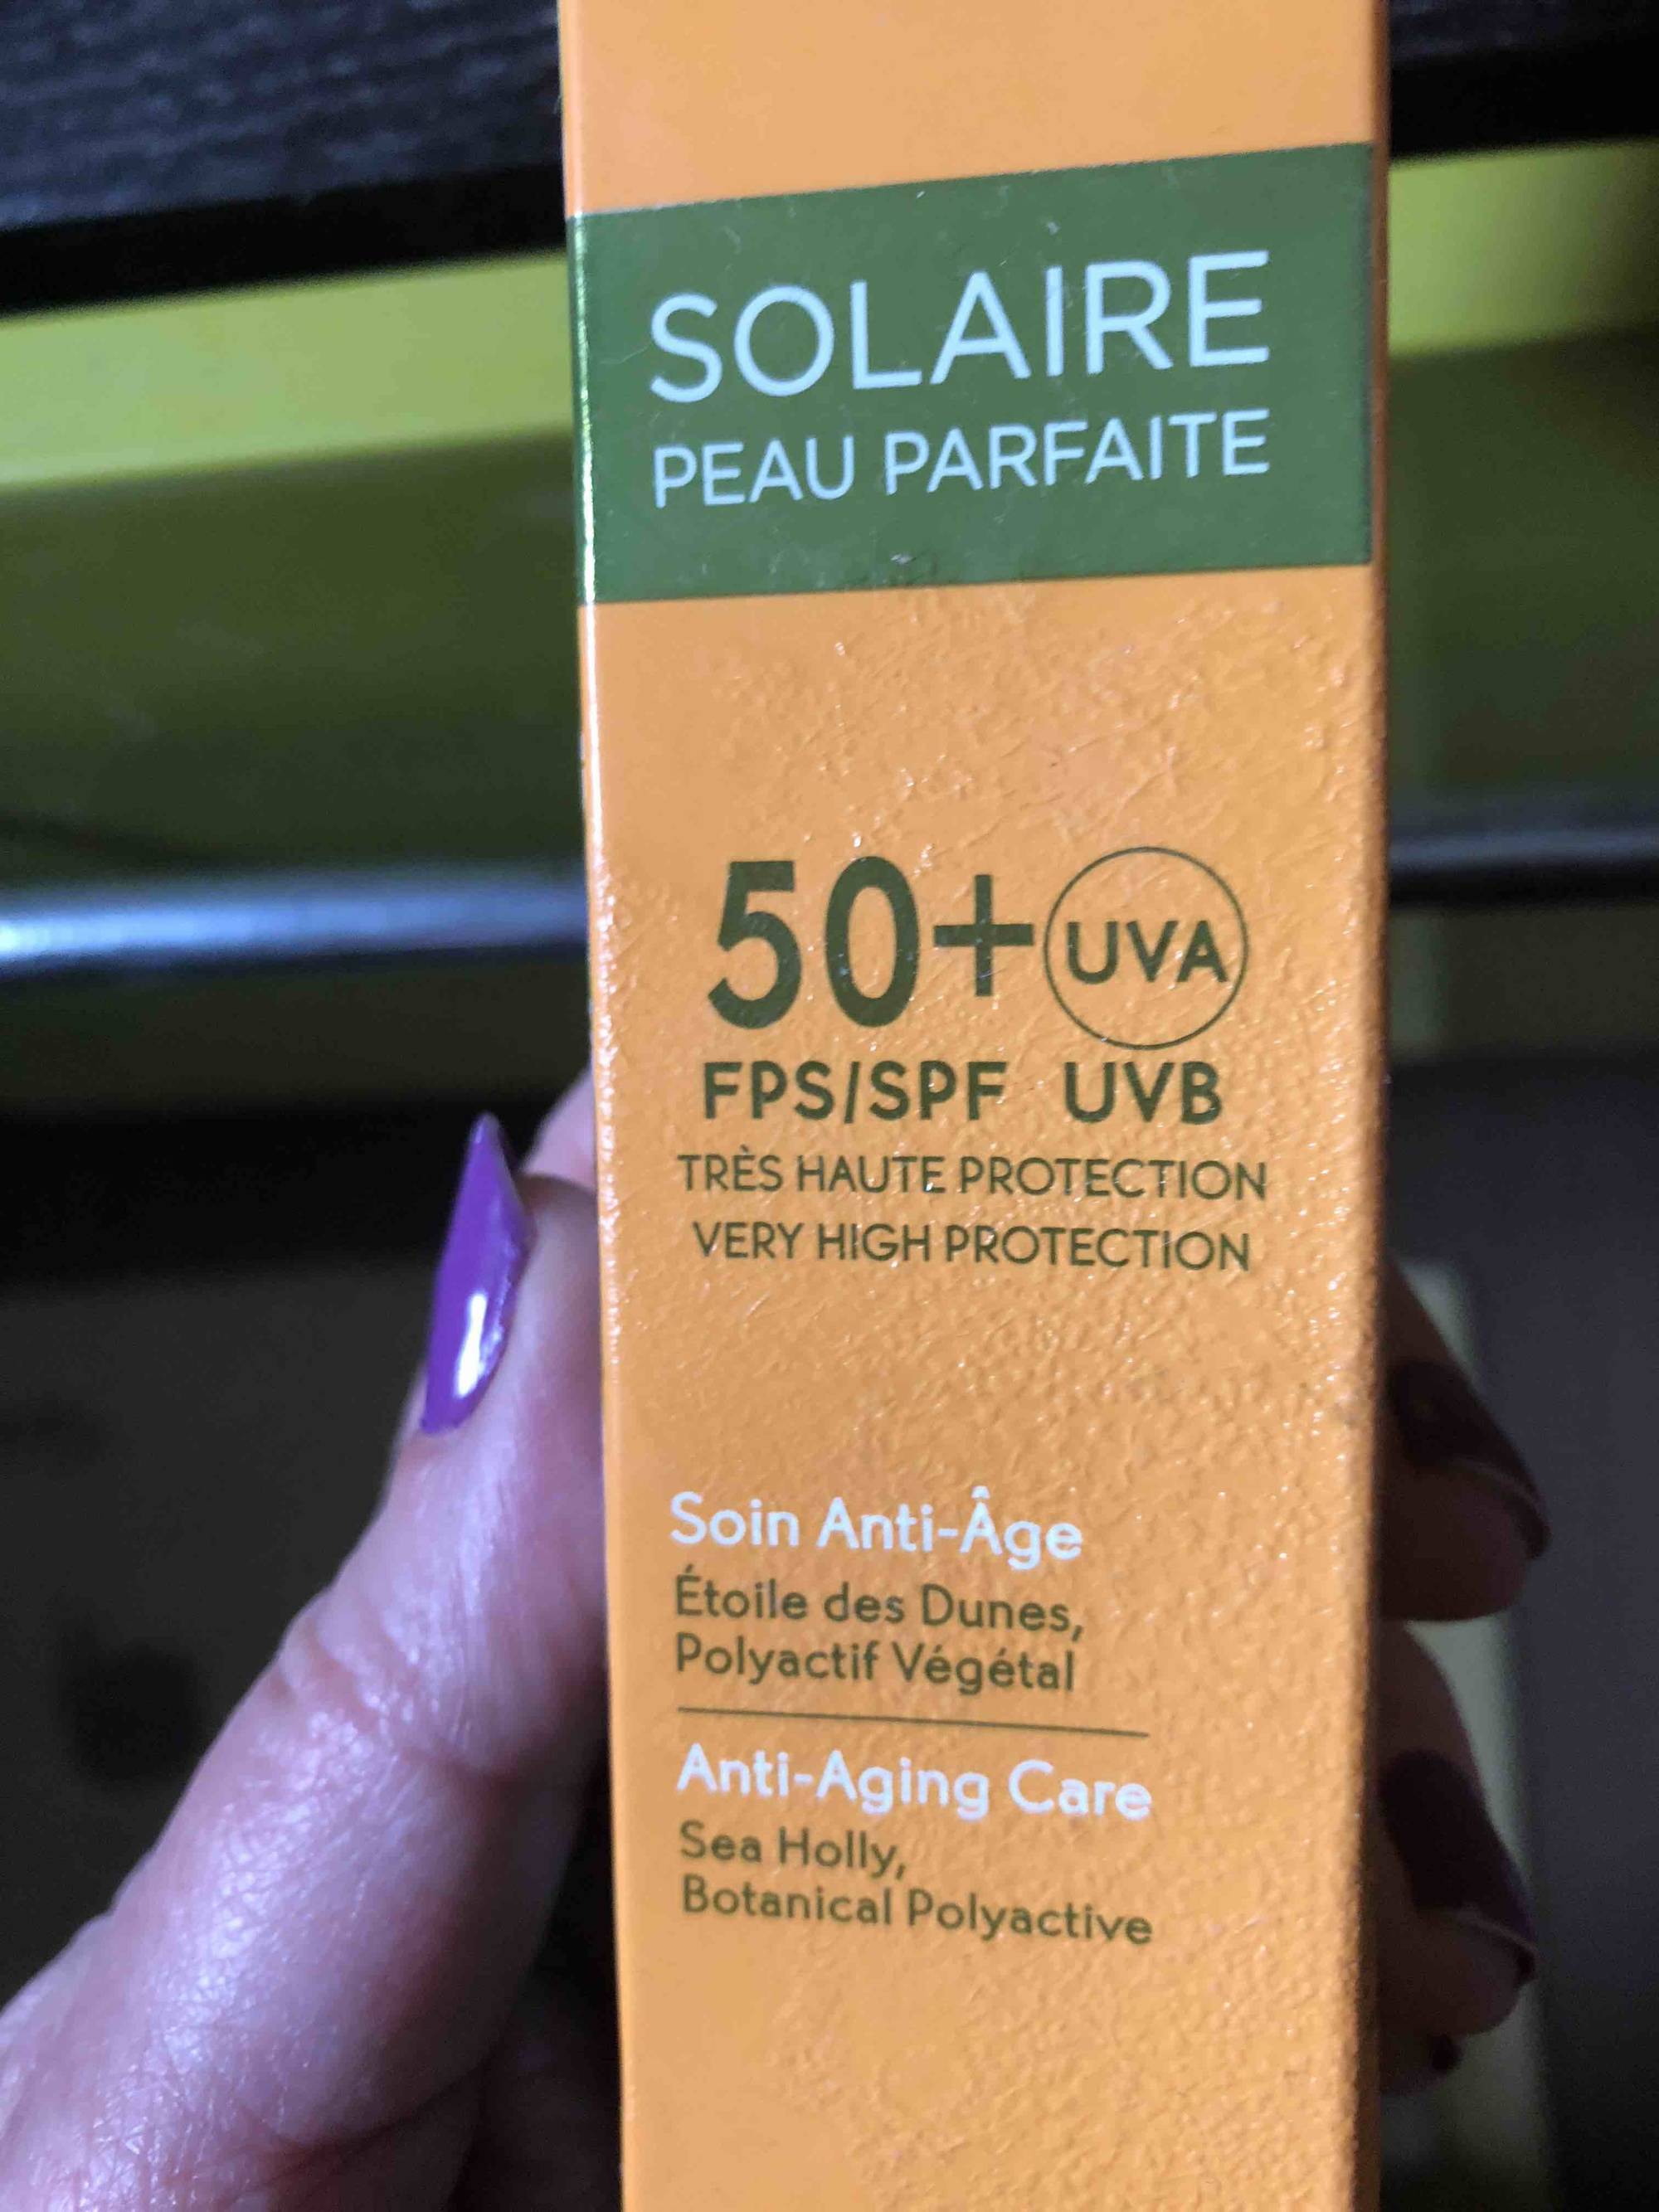 YVES ROCHER - Solaire peau parfaite - Soin anti-âge 50+ fps/spf